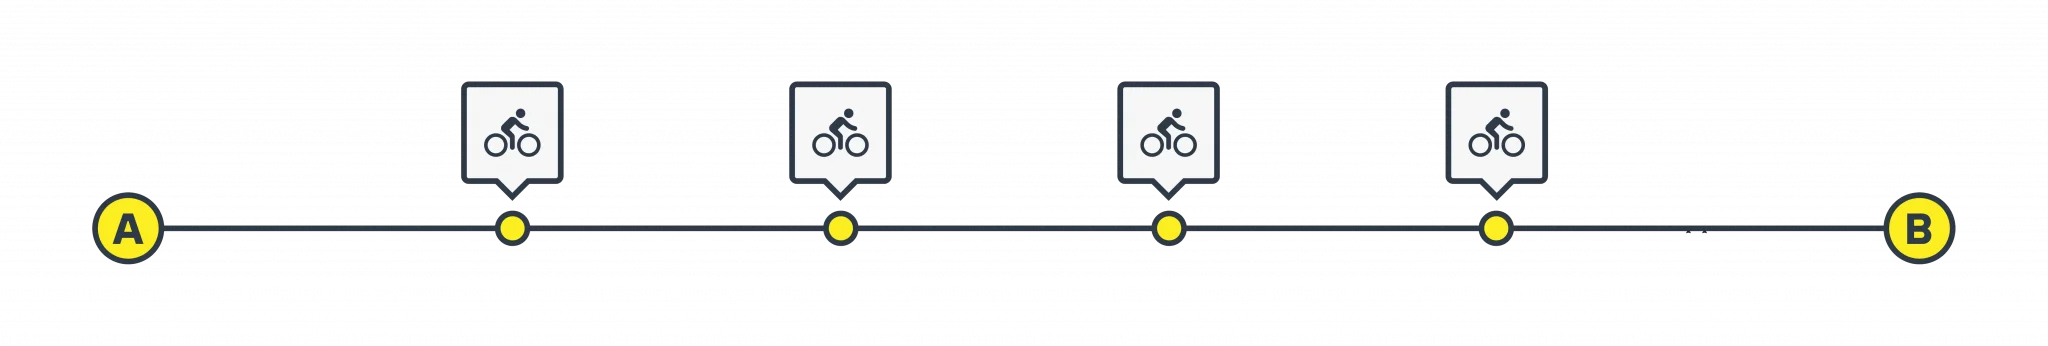 bikeep-smart-bike-stations-ecrr